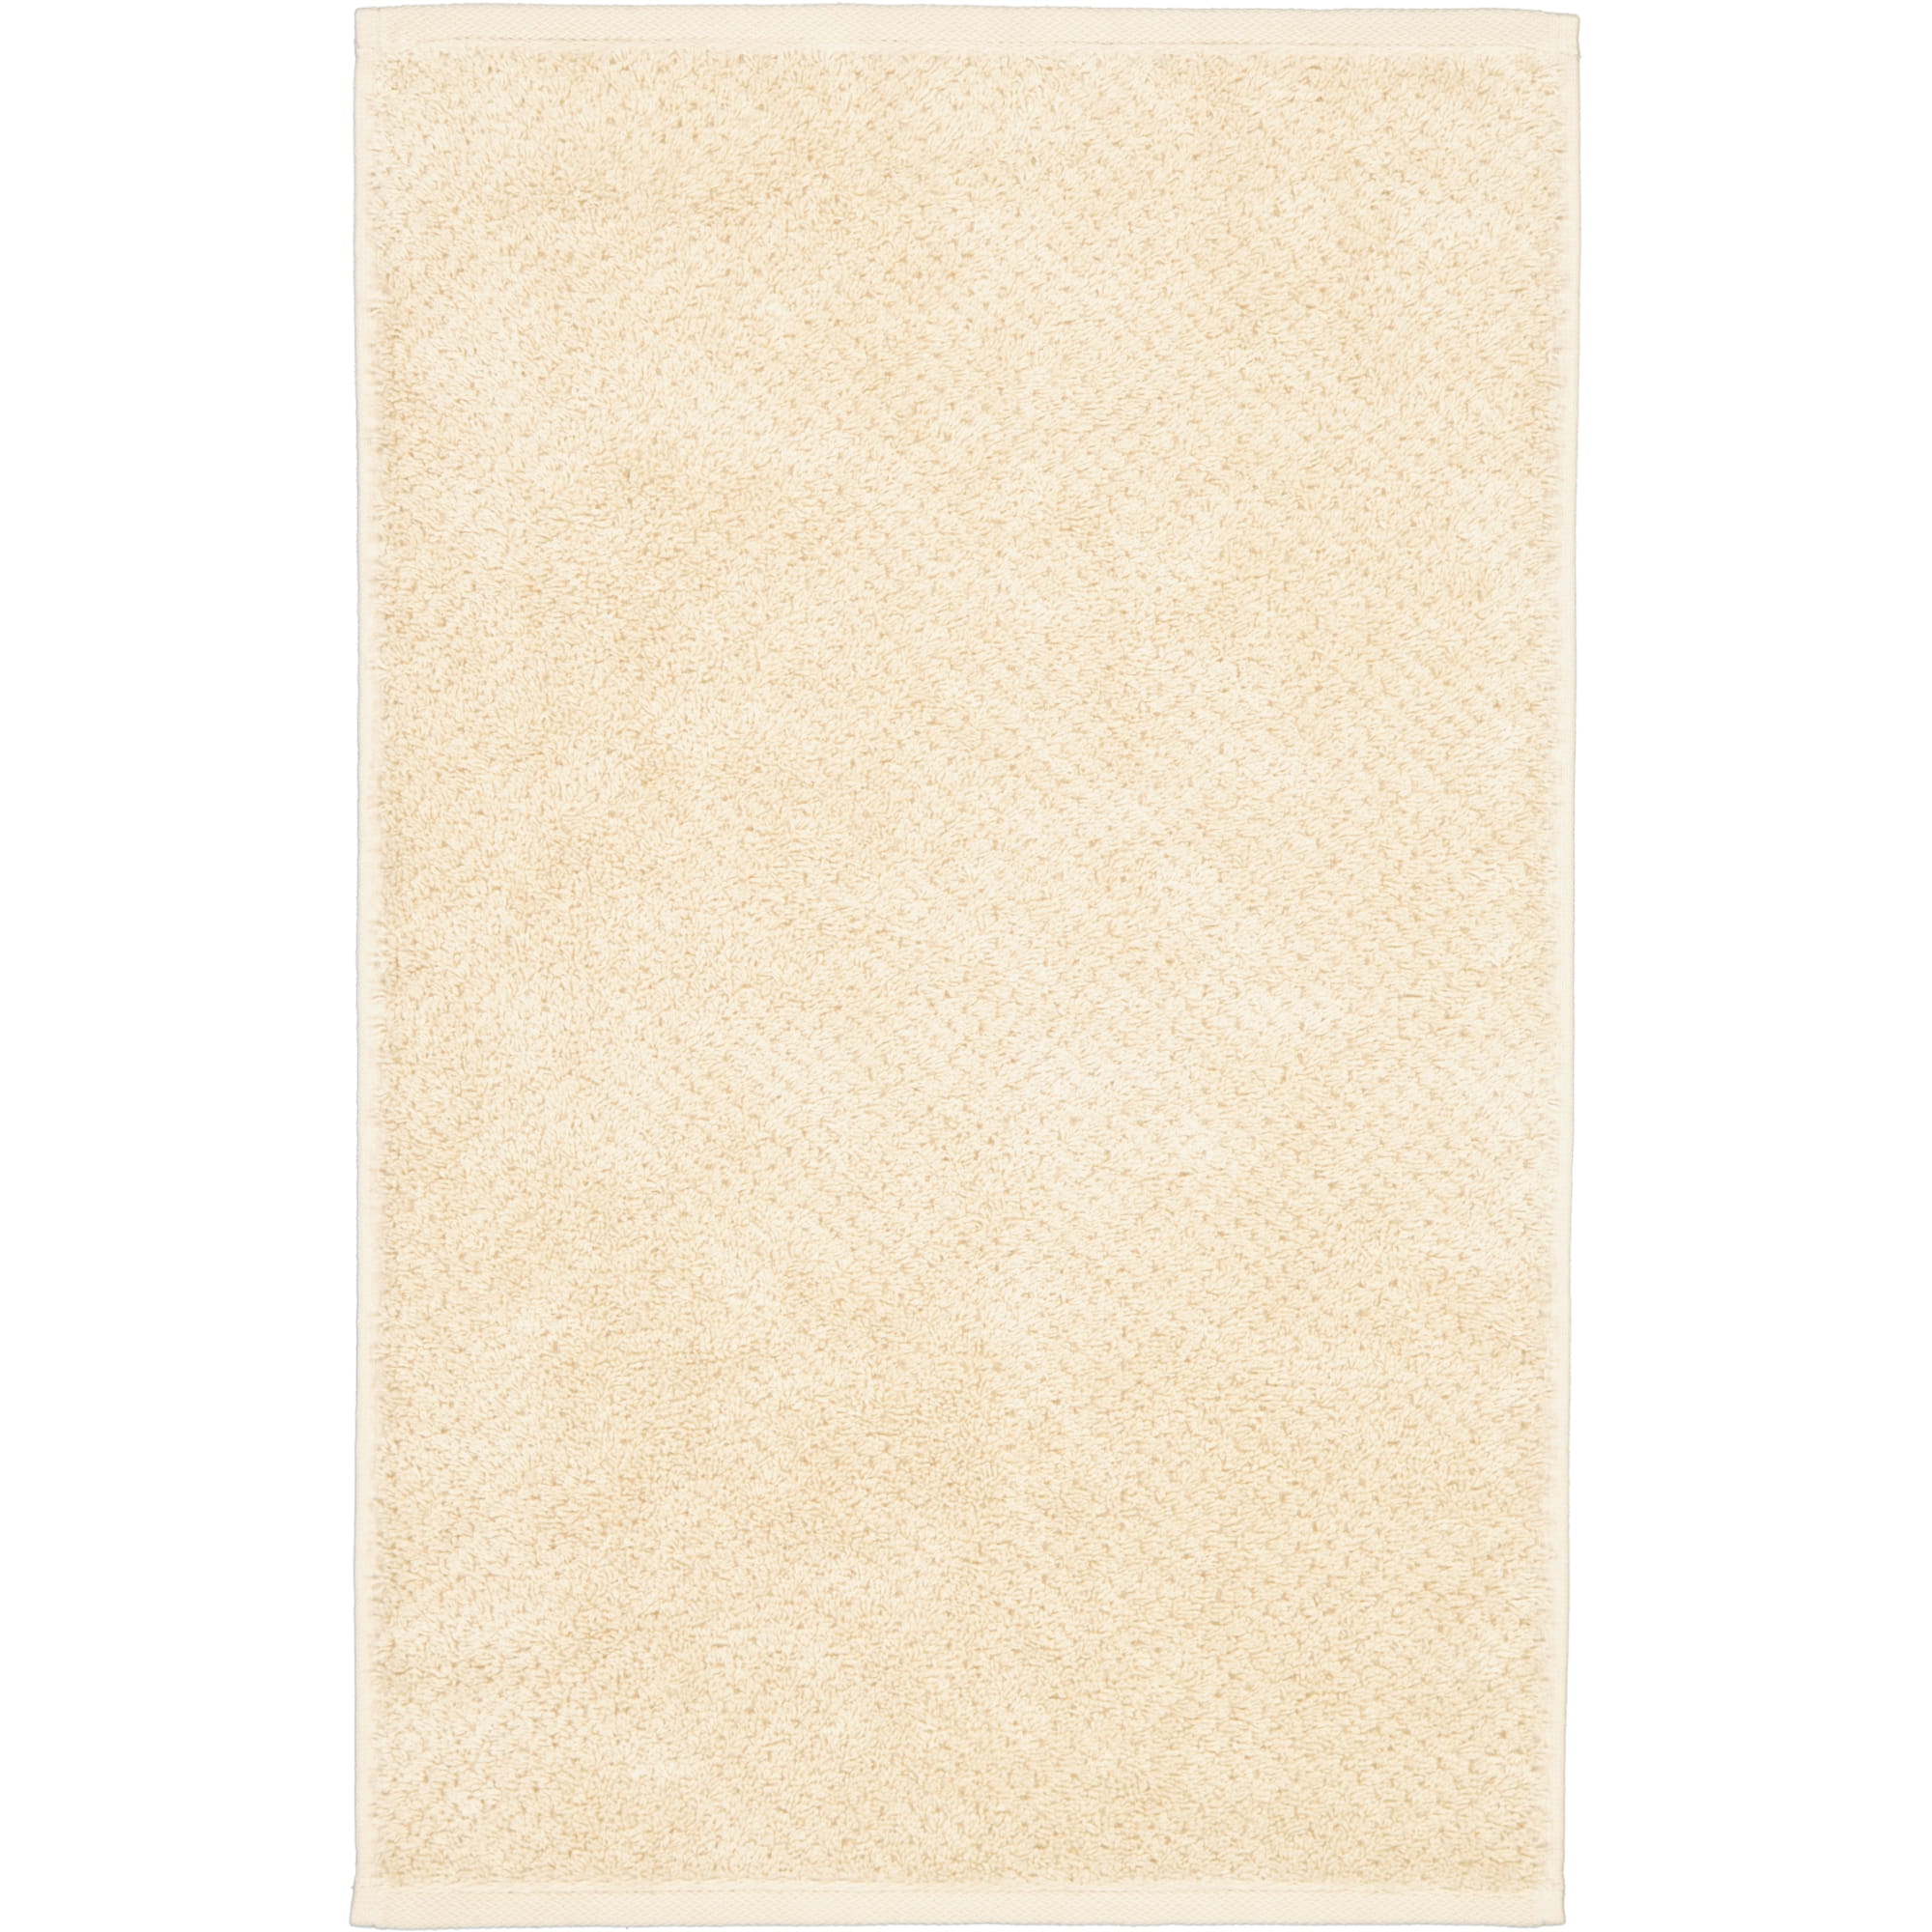 Handtücher beige | Marken Cawö - Cawö 370 Farbe: Handtücher | Cawö 6500 - Pure |